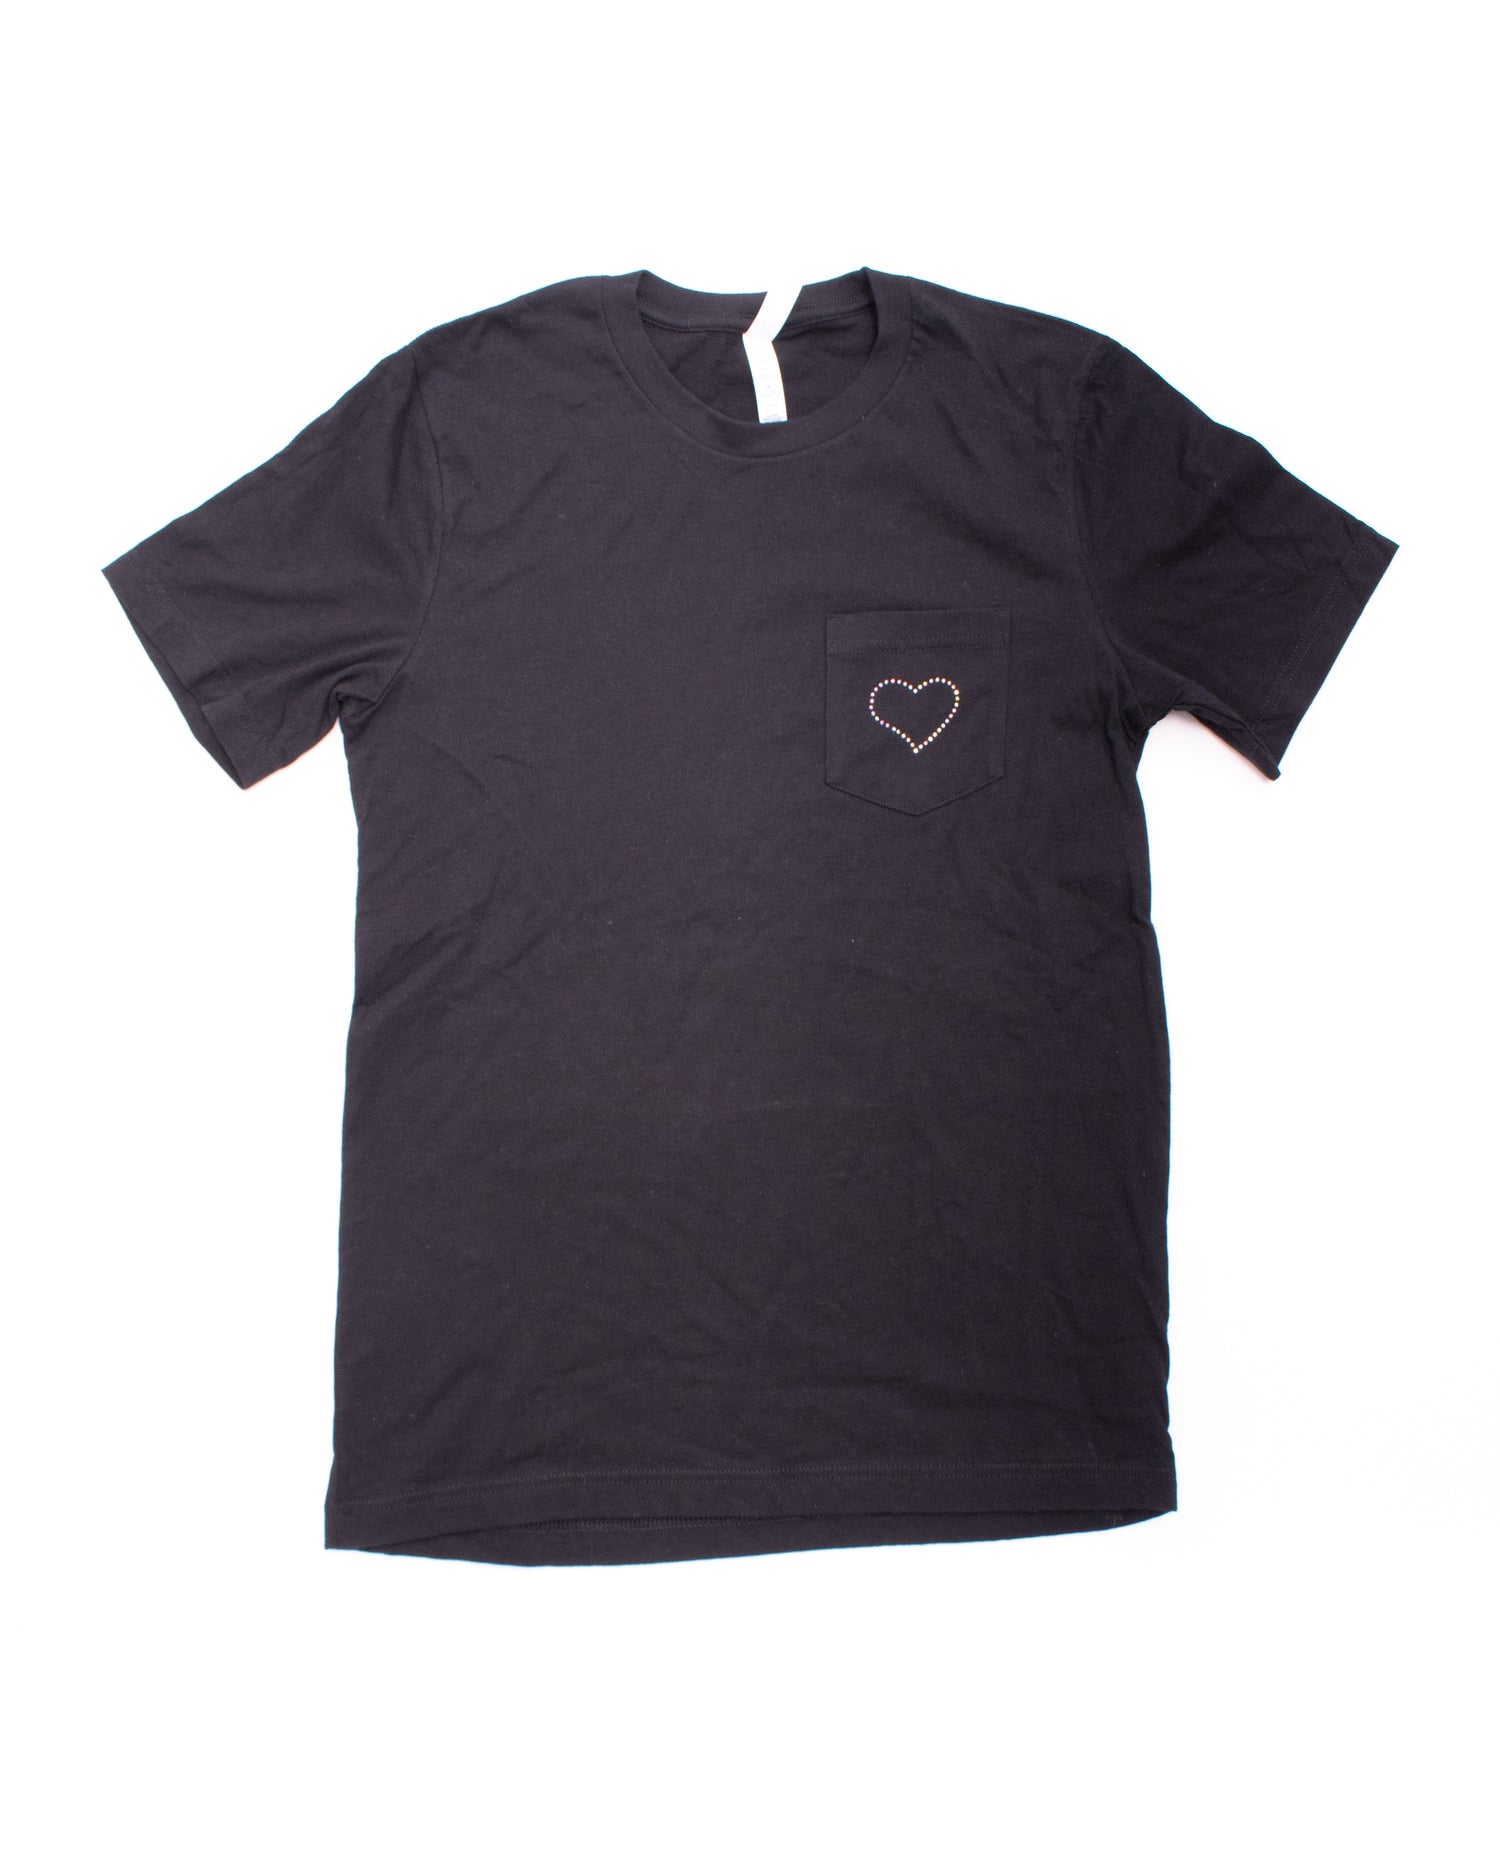 Pocket T - Heart - Lunautics Shirt